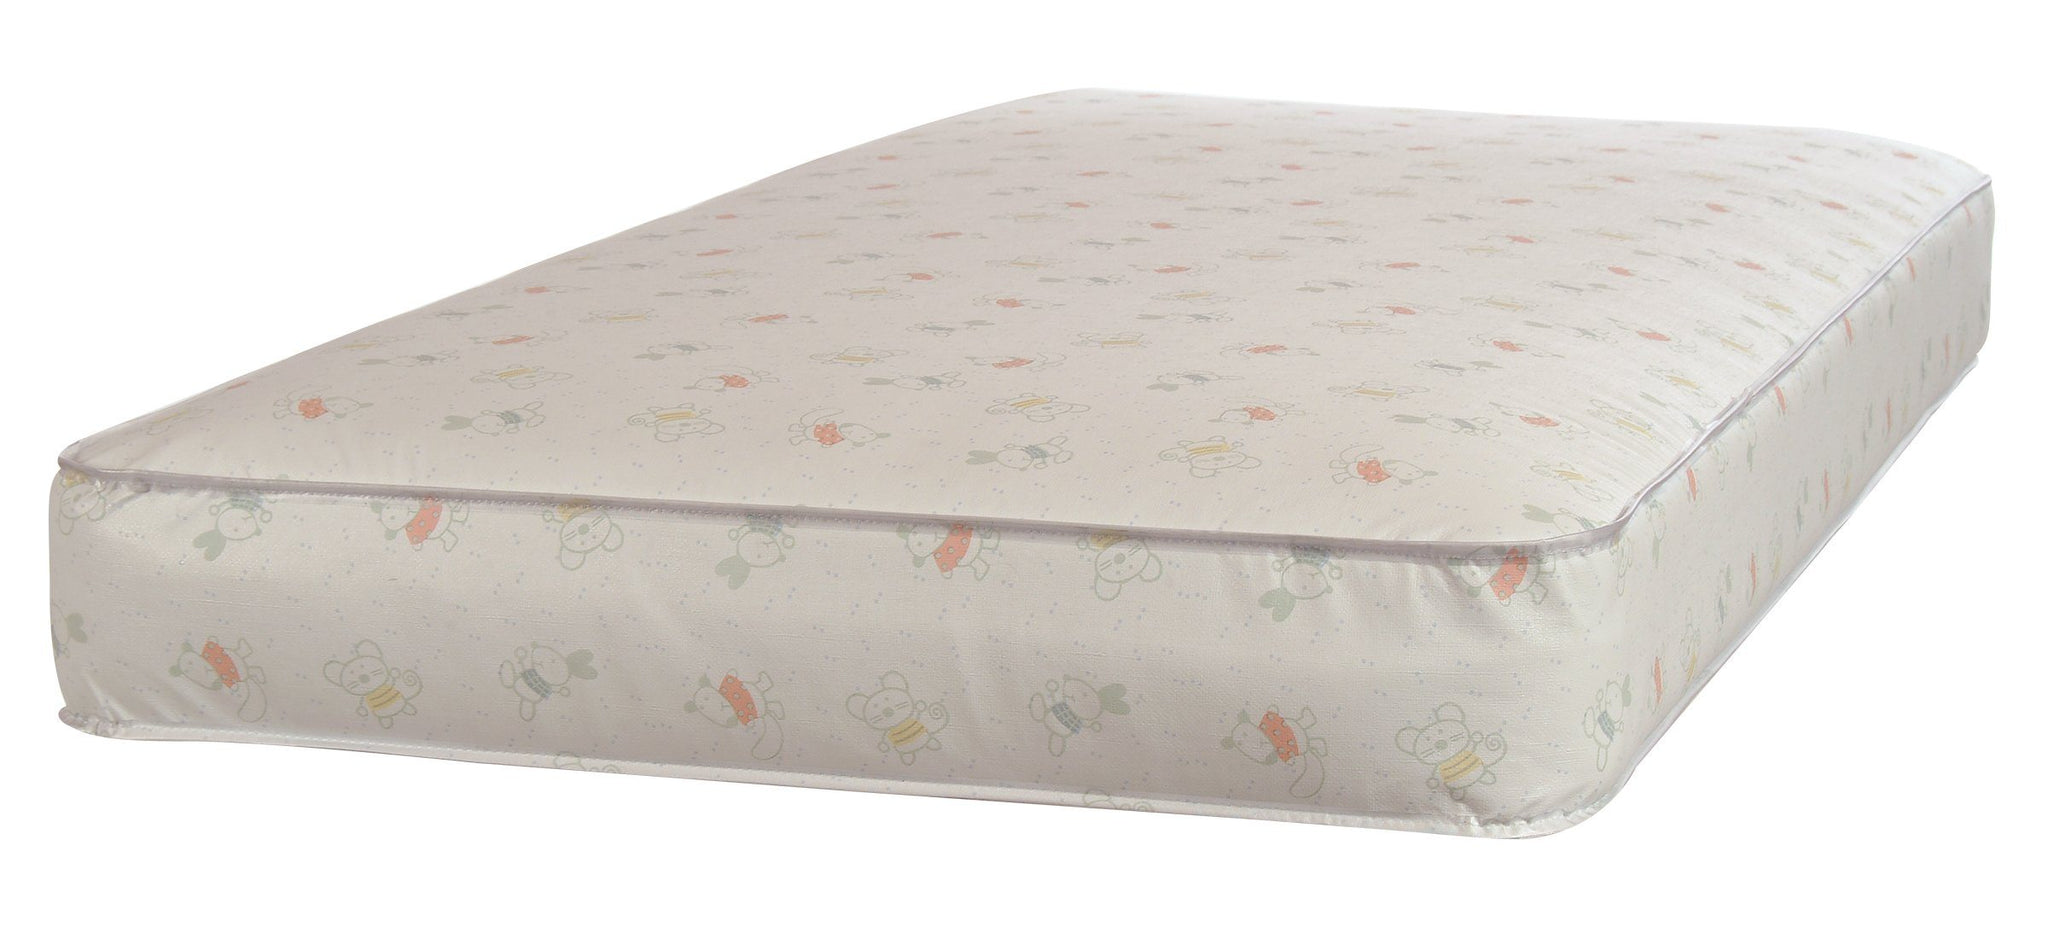 kolcraft crib and toddler bed mattress